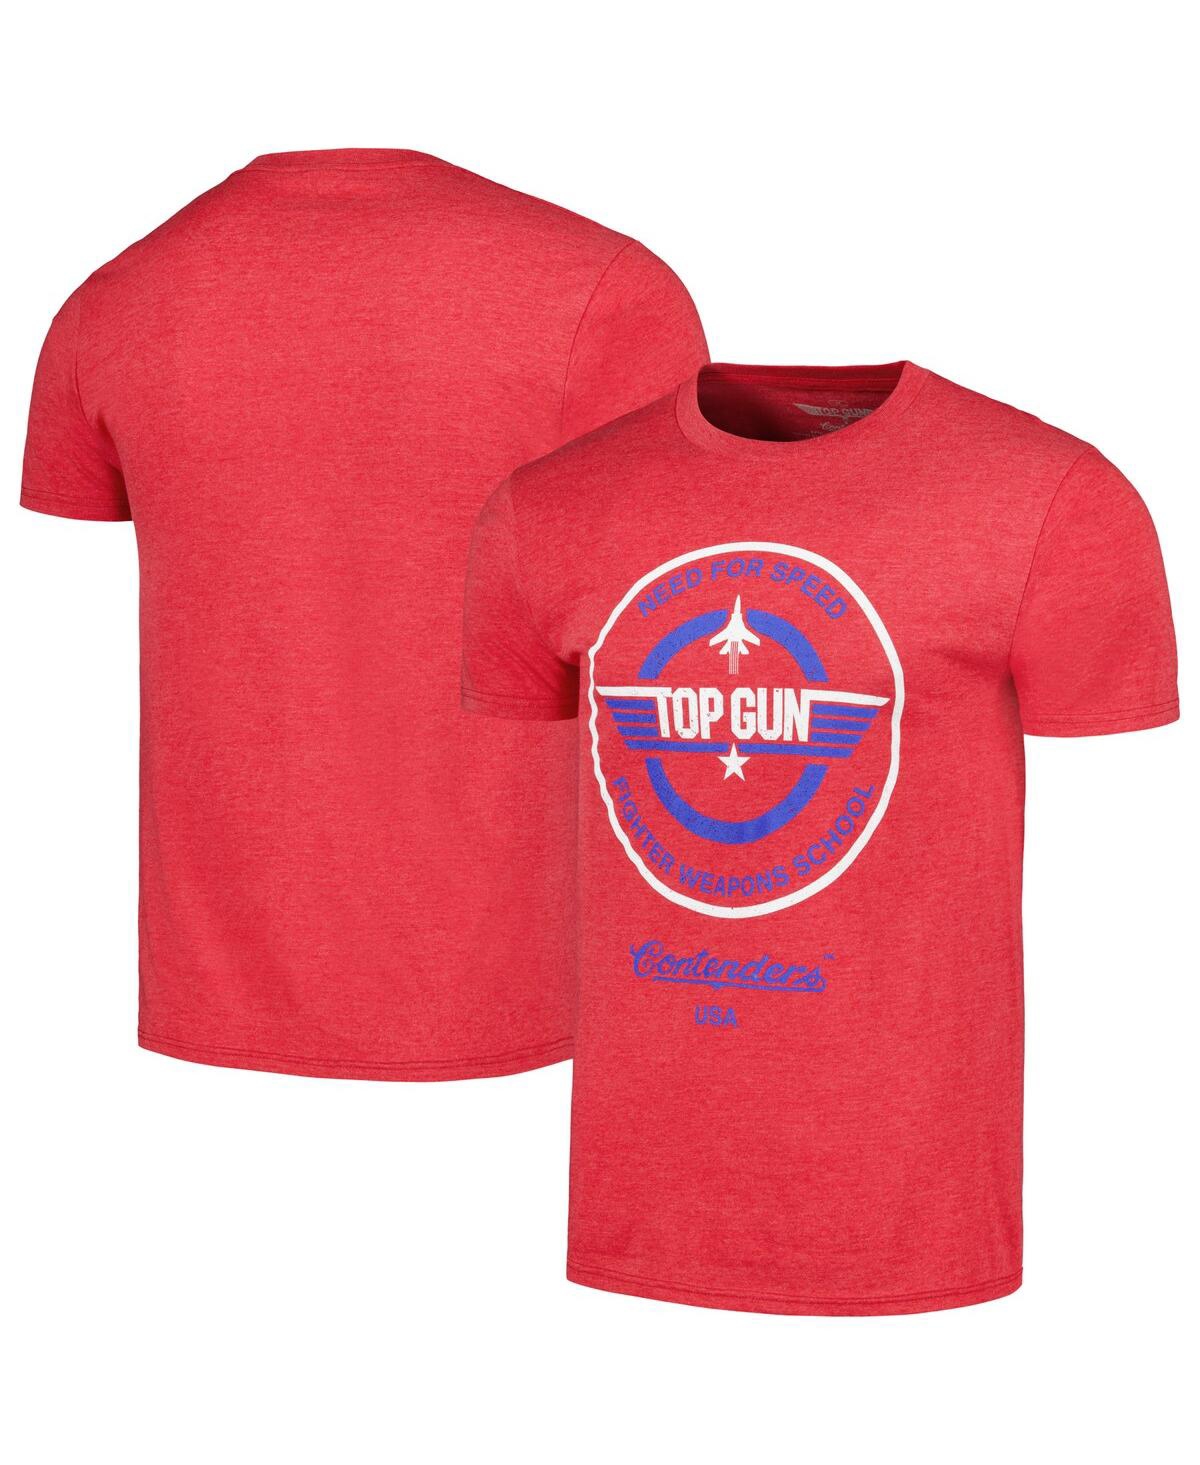 Contenders Clothing Men's  Heather Red Top Gun Crest T-shirt